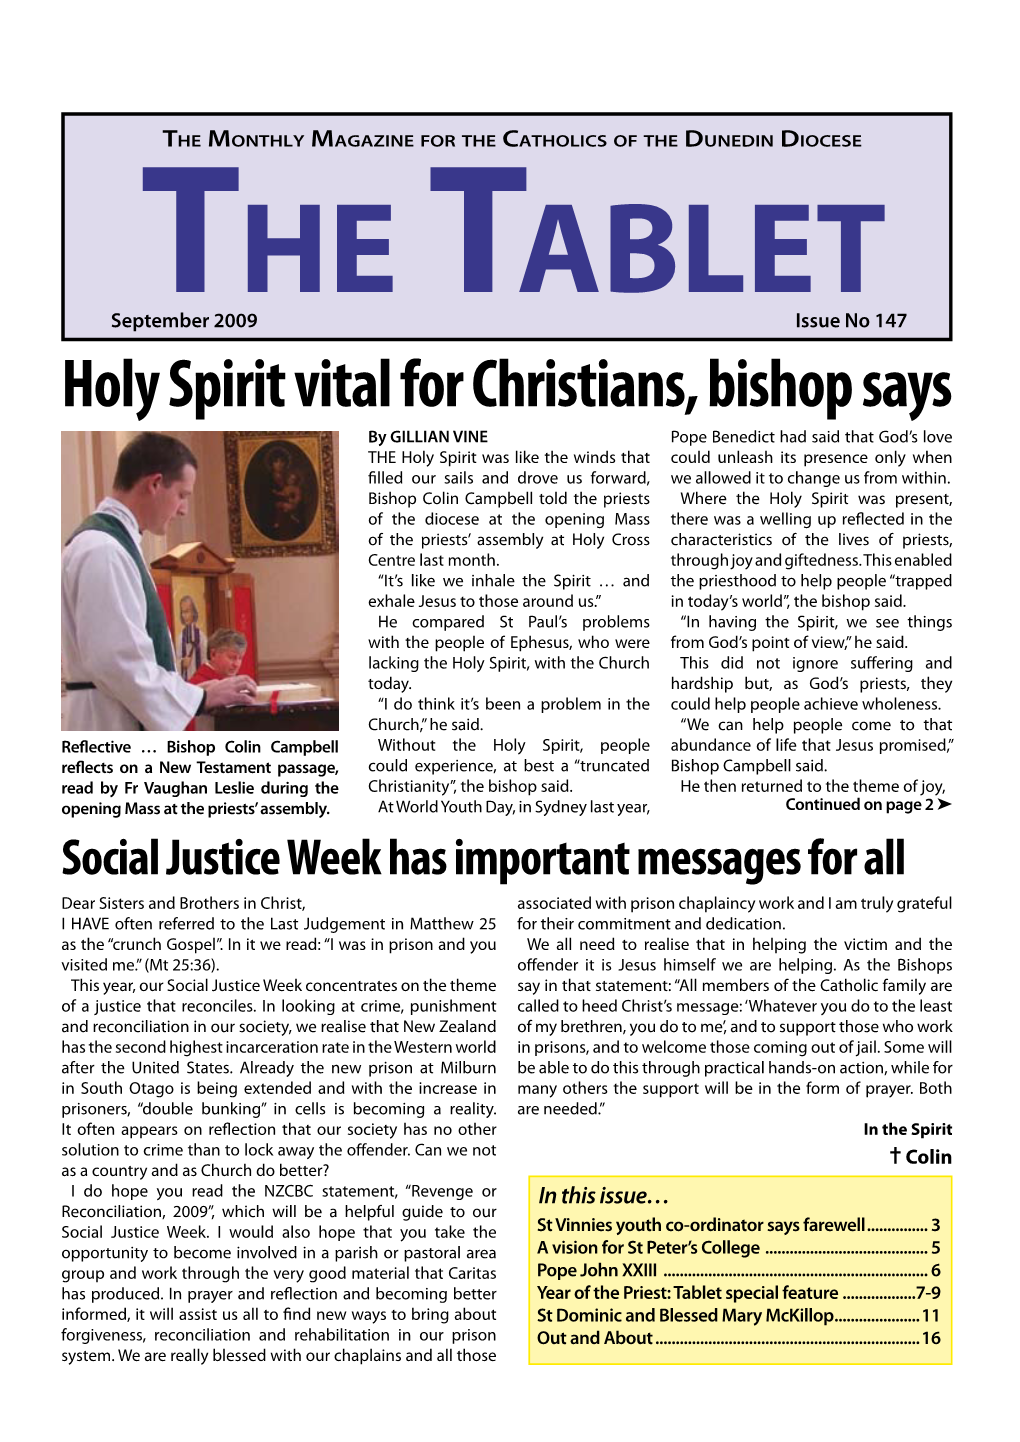 Holy Spirit Vital for Christians, Bishop Says